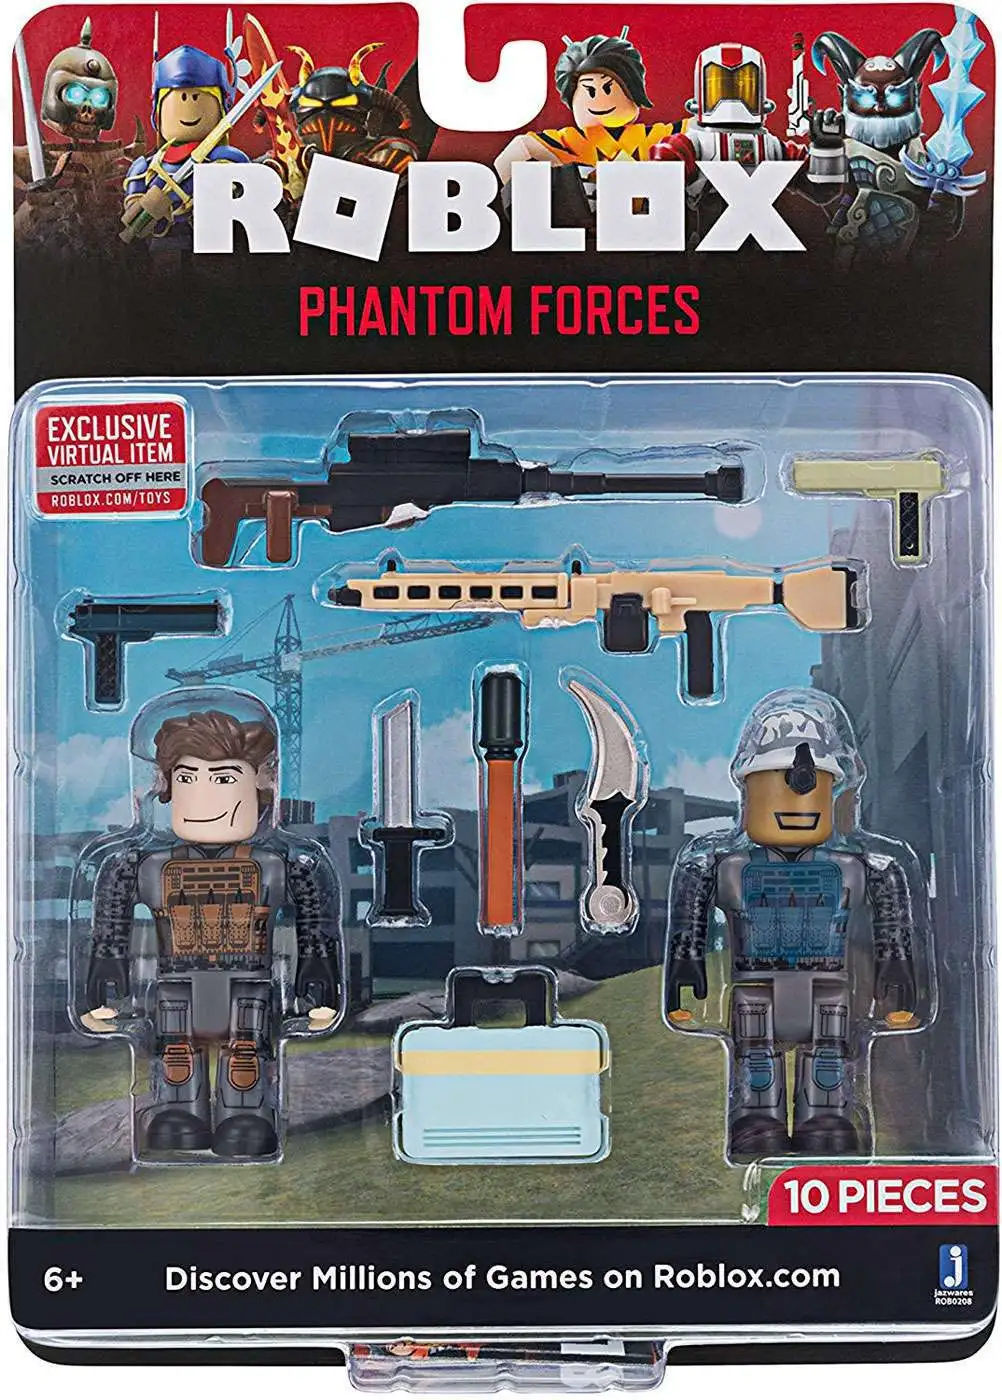 Roblox Desktop Series Collection - Phantom Forces: Tactical Genius  [Includes Exclusive Virtual Item]